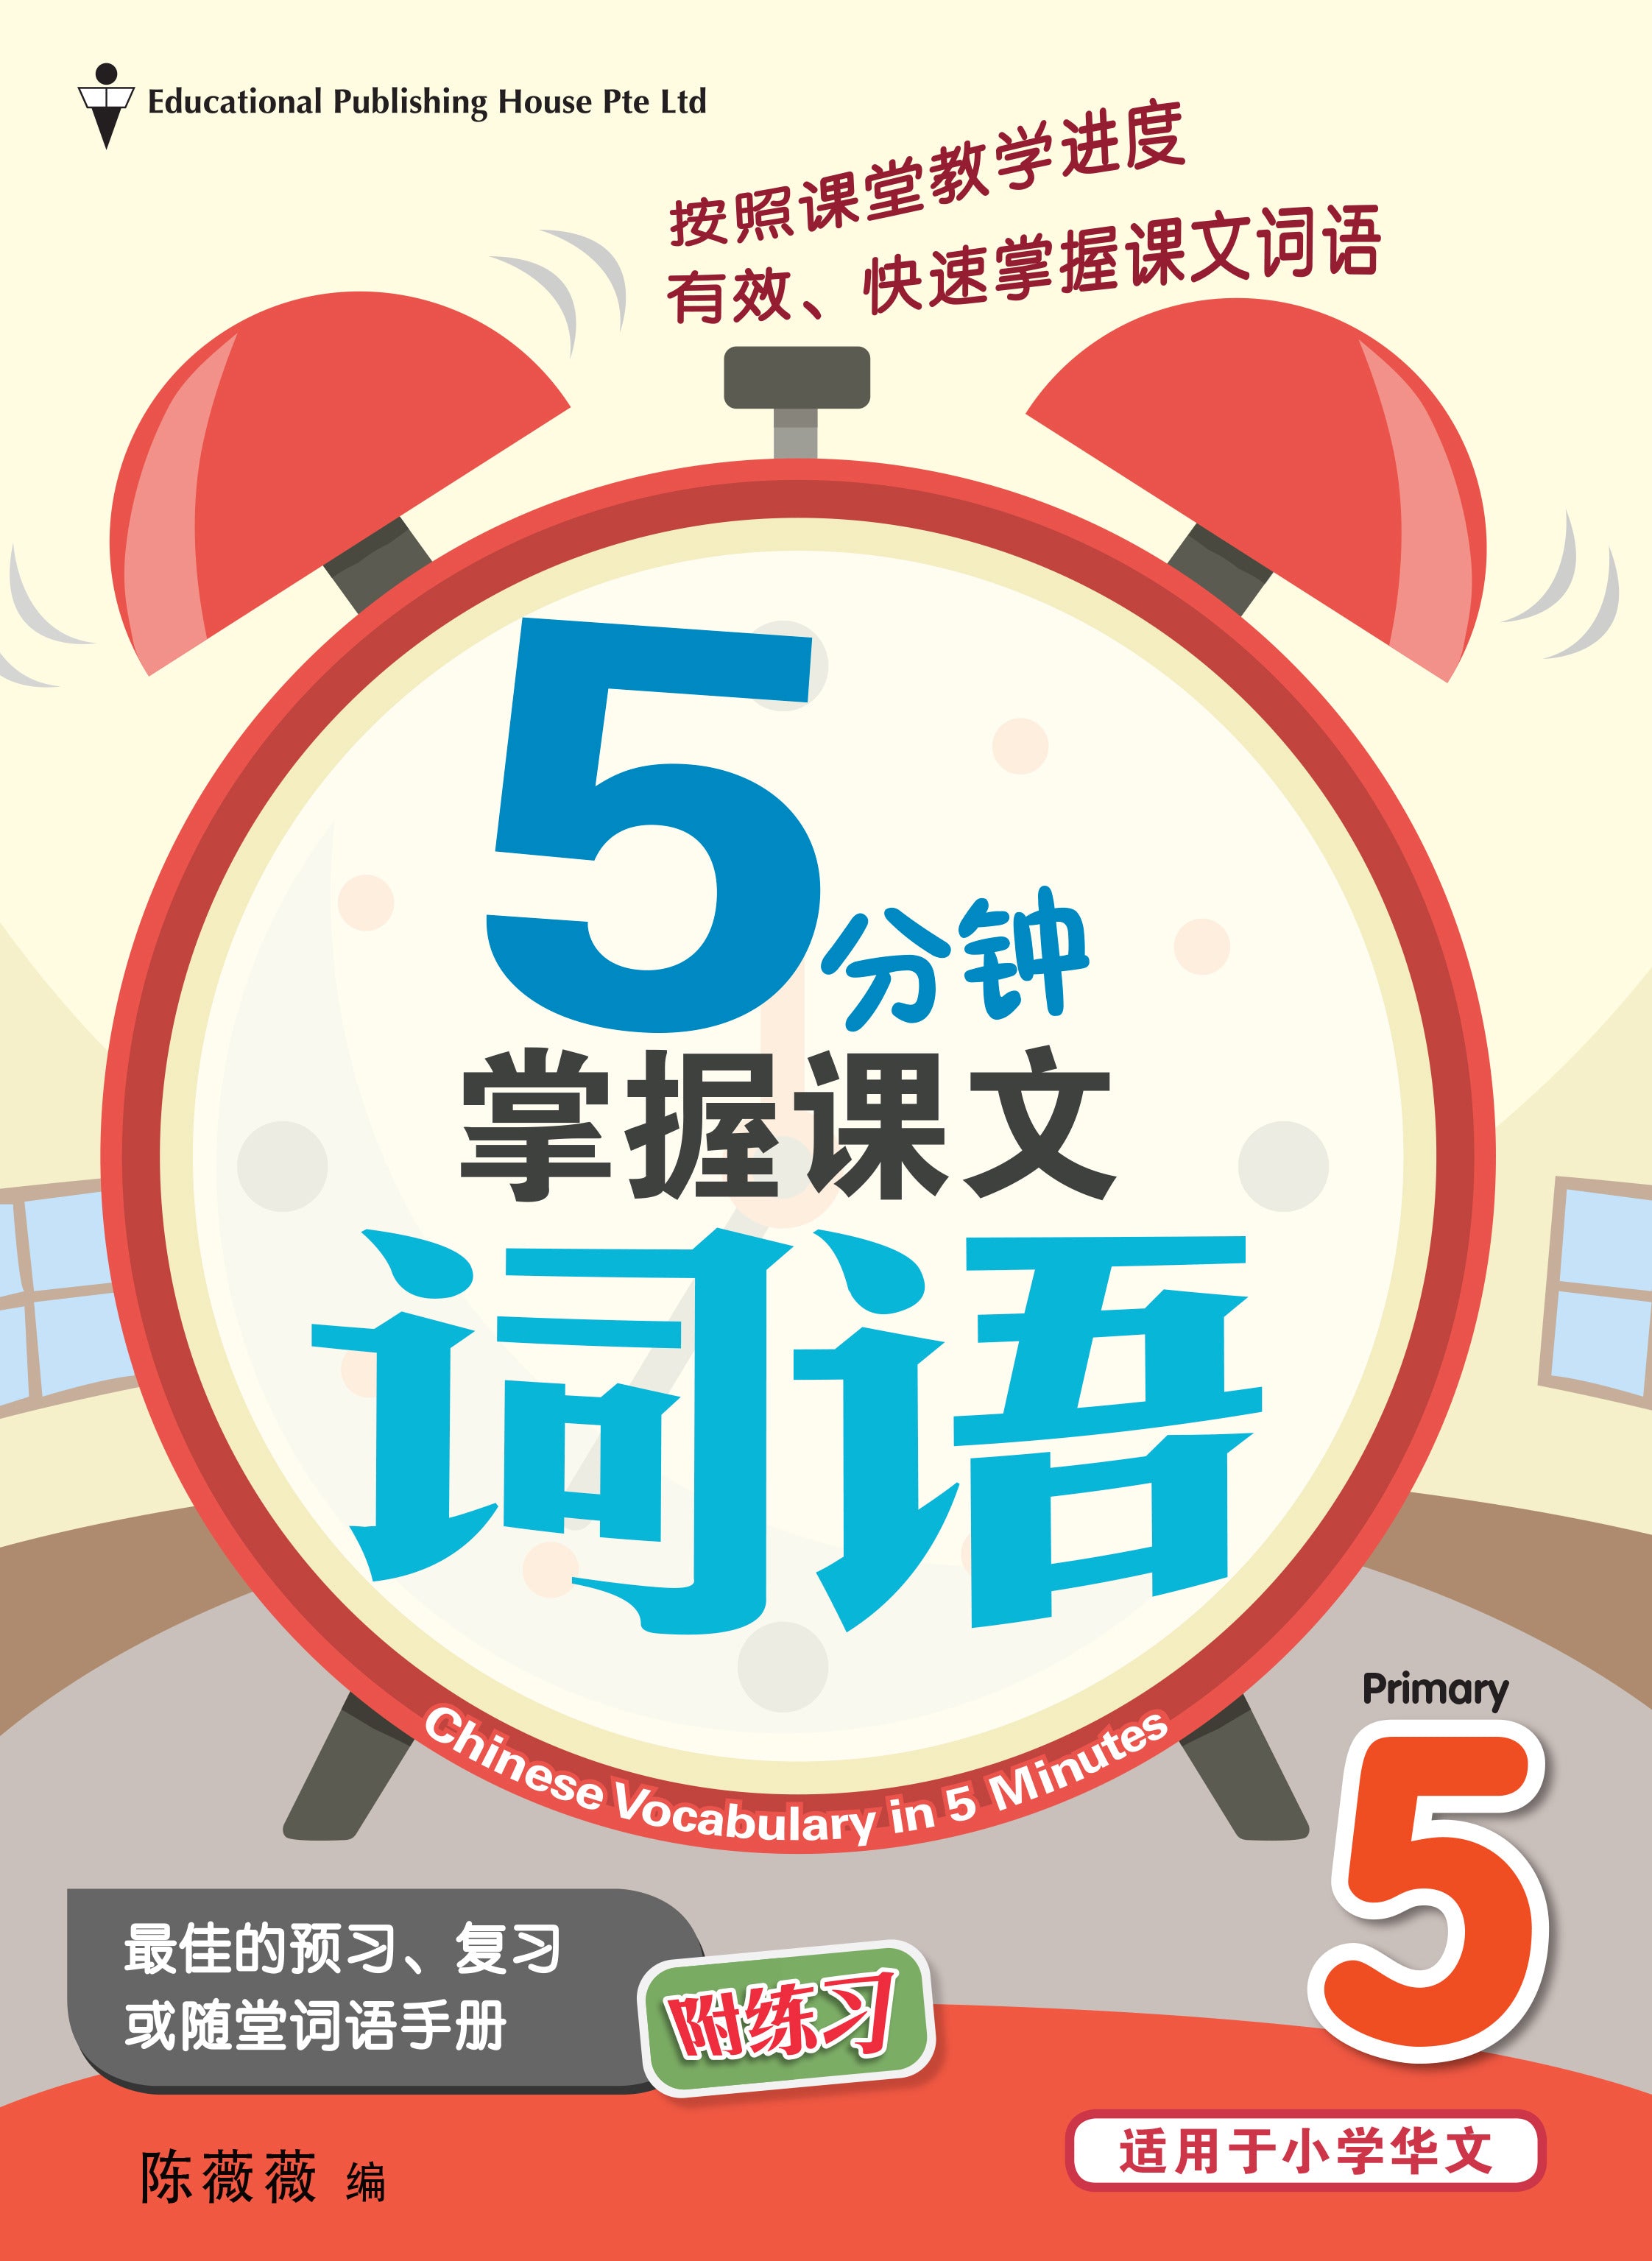 Primary 5 5分钟掌握课文词语 Chinese Vocabulary in 5 Mins - _MS, BASIC, CHINESE, EDUCATIONAL PUBLISHING HOUSE, PRIMARY 5